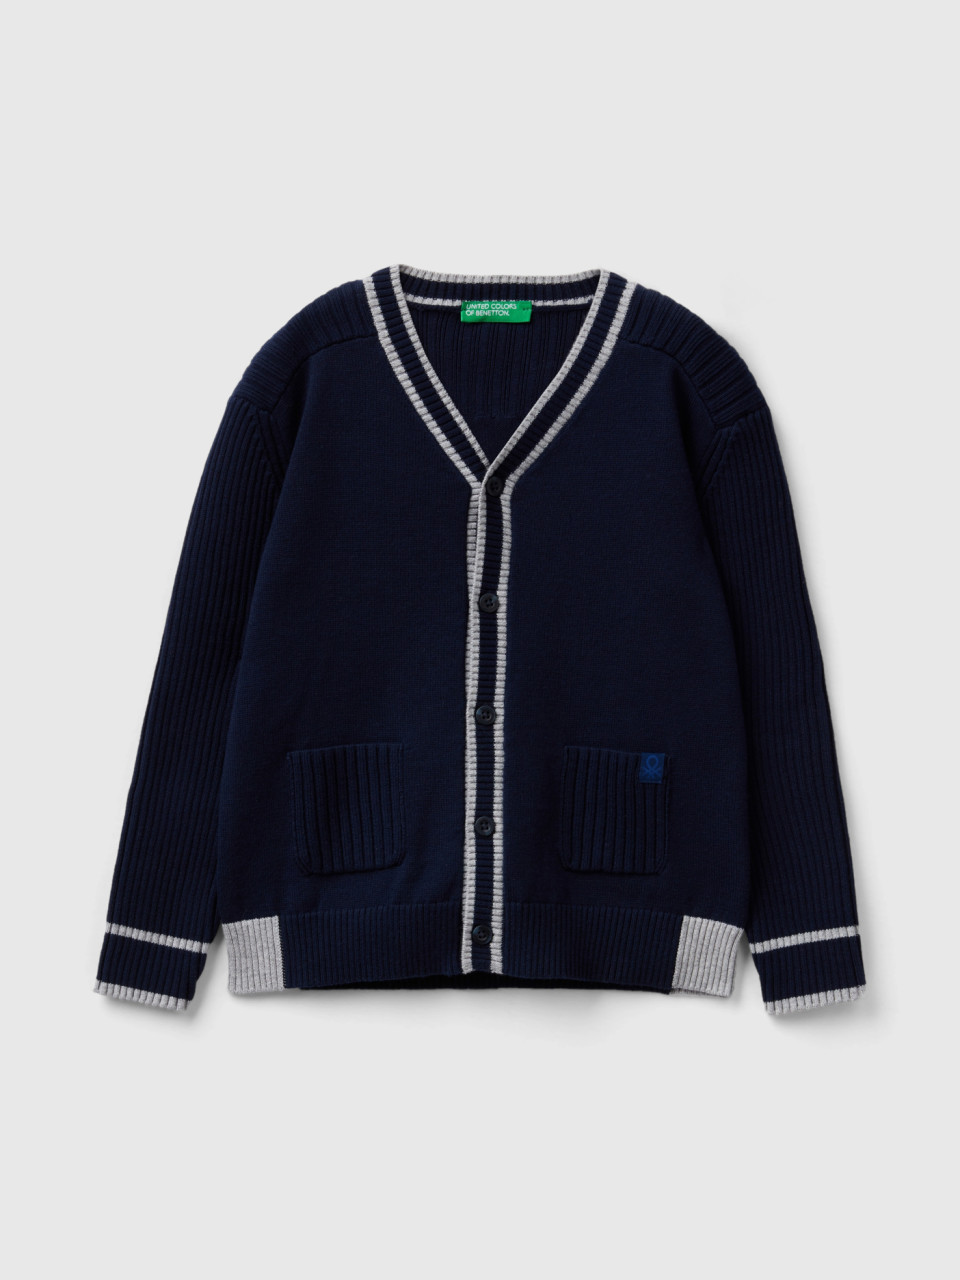 Benetton, Cardigan With Pockets In Tricot Cotton, Dark Blue, Kids